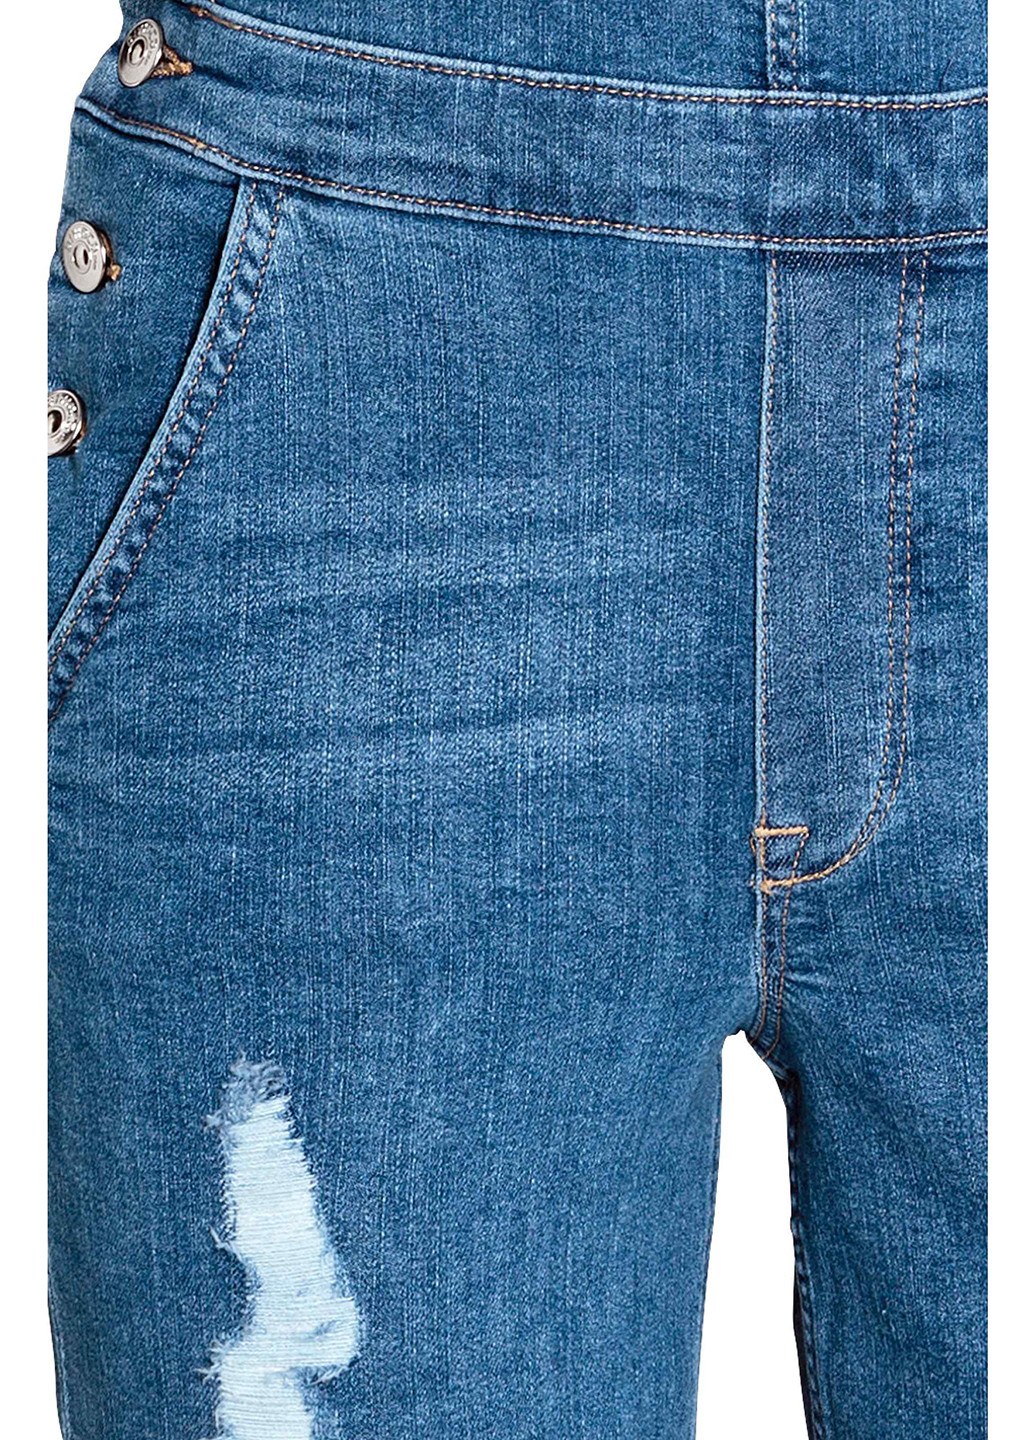 Комбинезон H&M комбинезон-брюки светло-синий денил